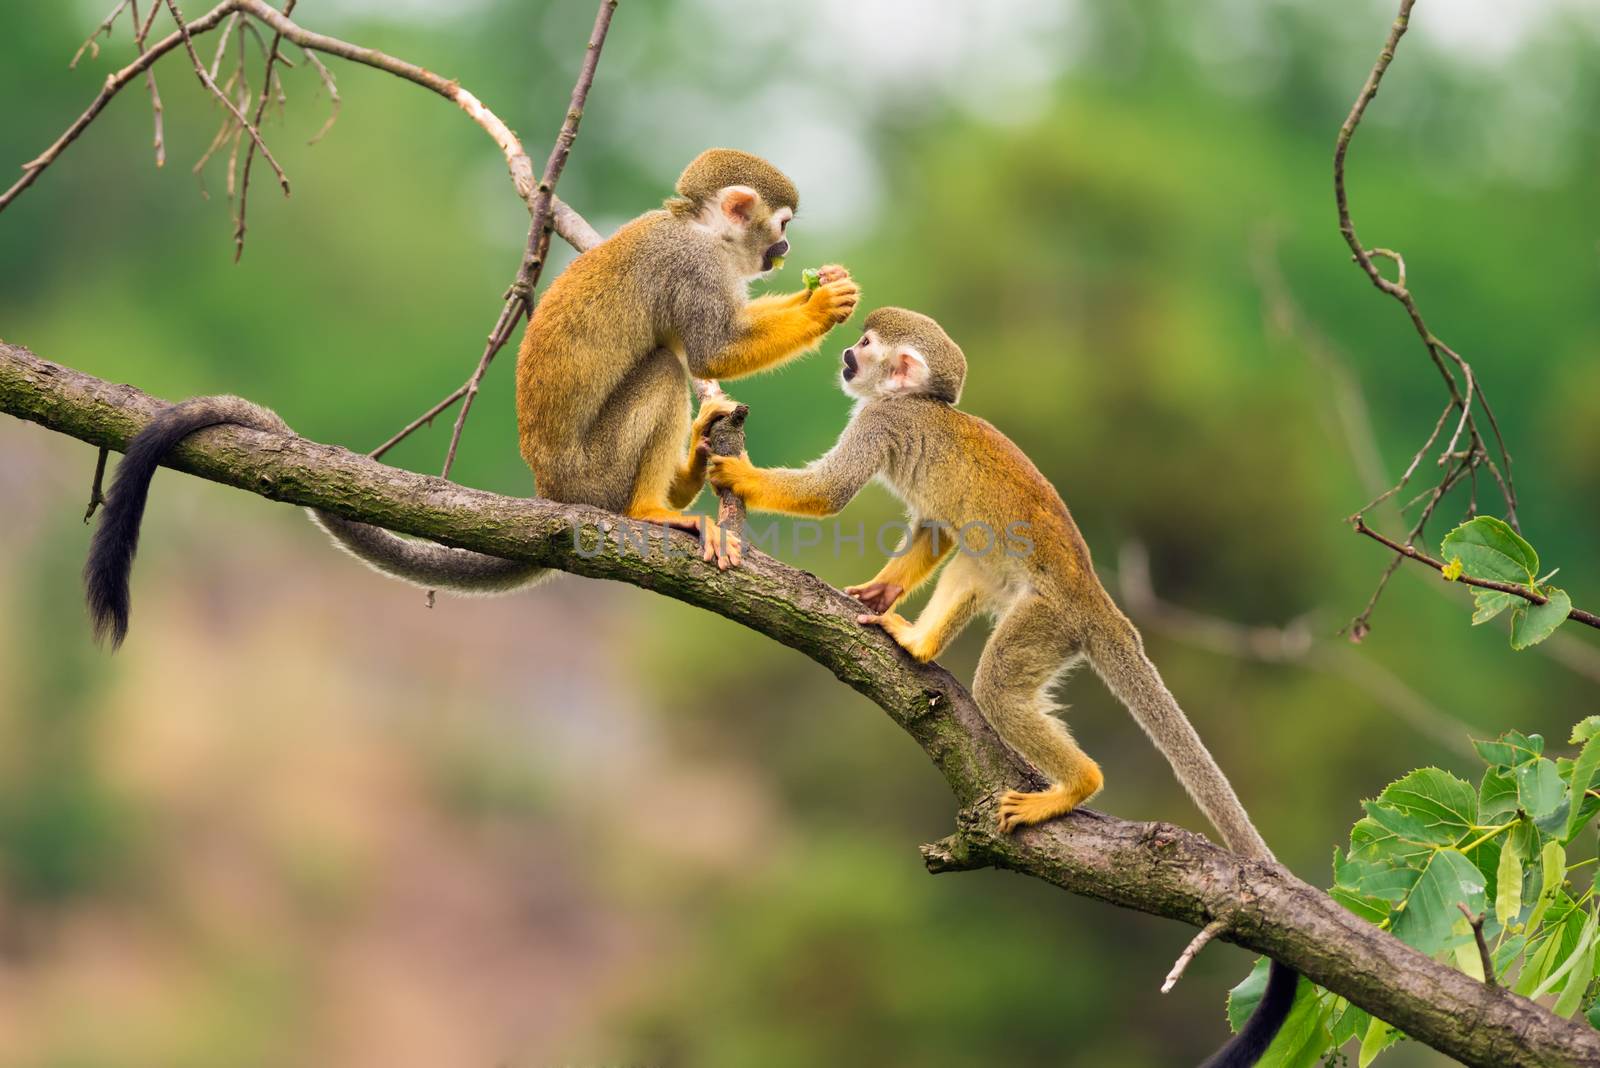 Two common squirrel monkeys also known as Saimiri sciureus playing on a tree branch